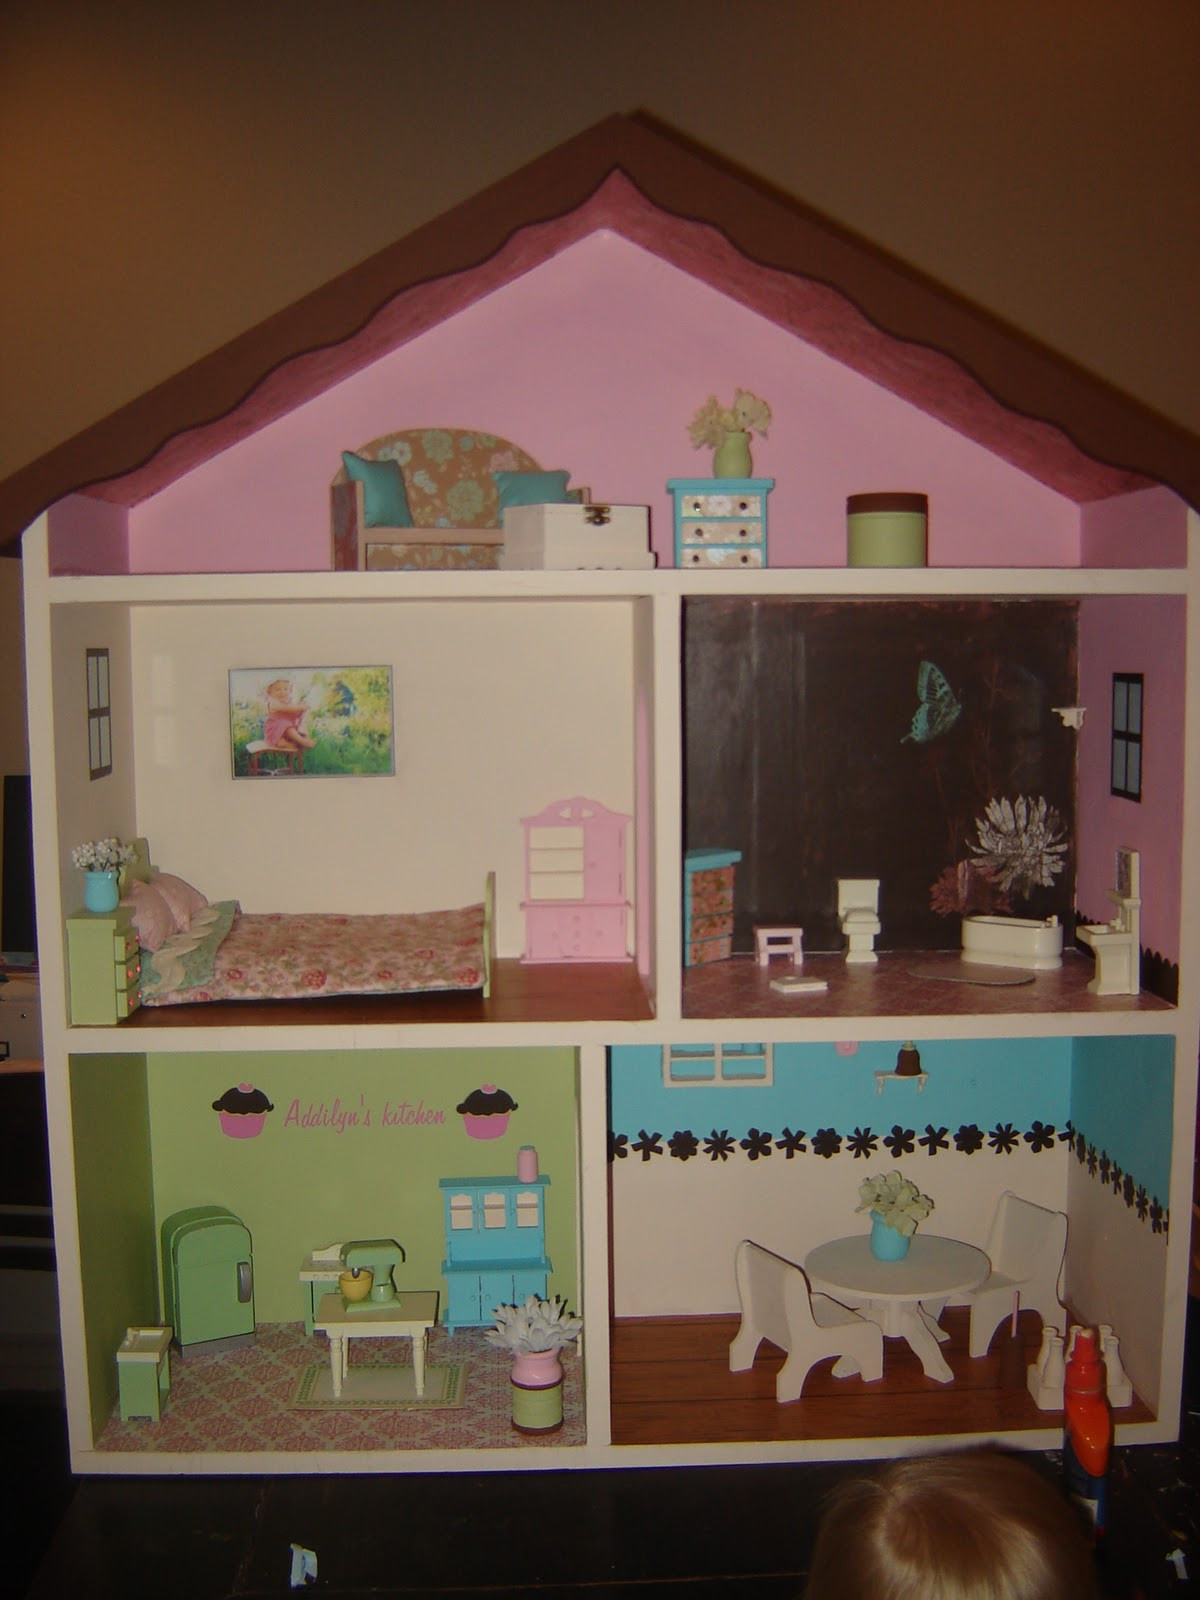 Best ideas about DIY Dolls House
. Save or Pin Ooh La La DIY Dollhouse Now.